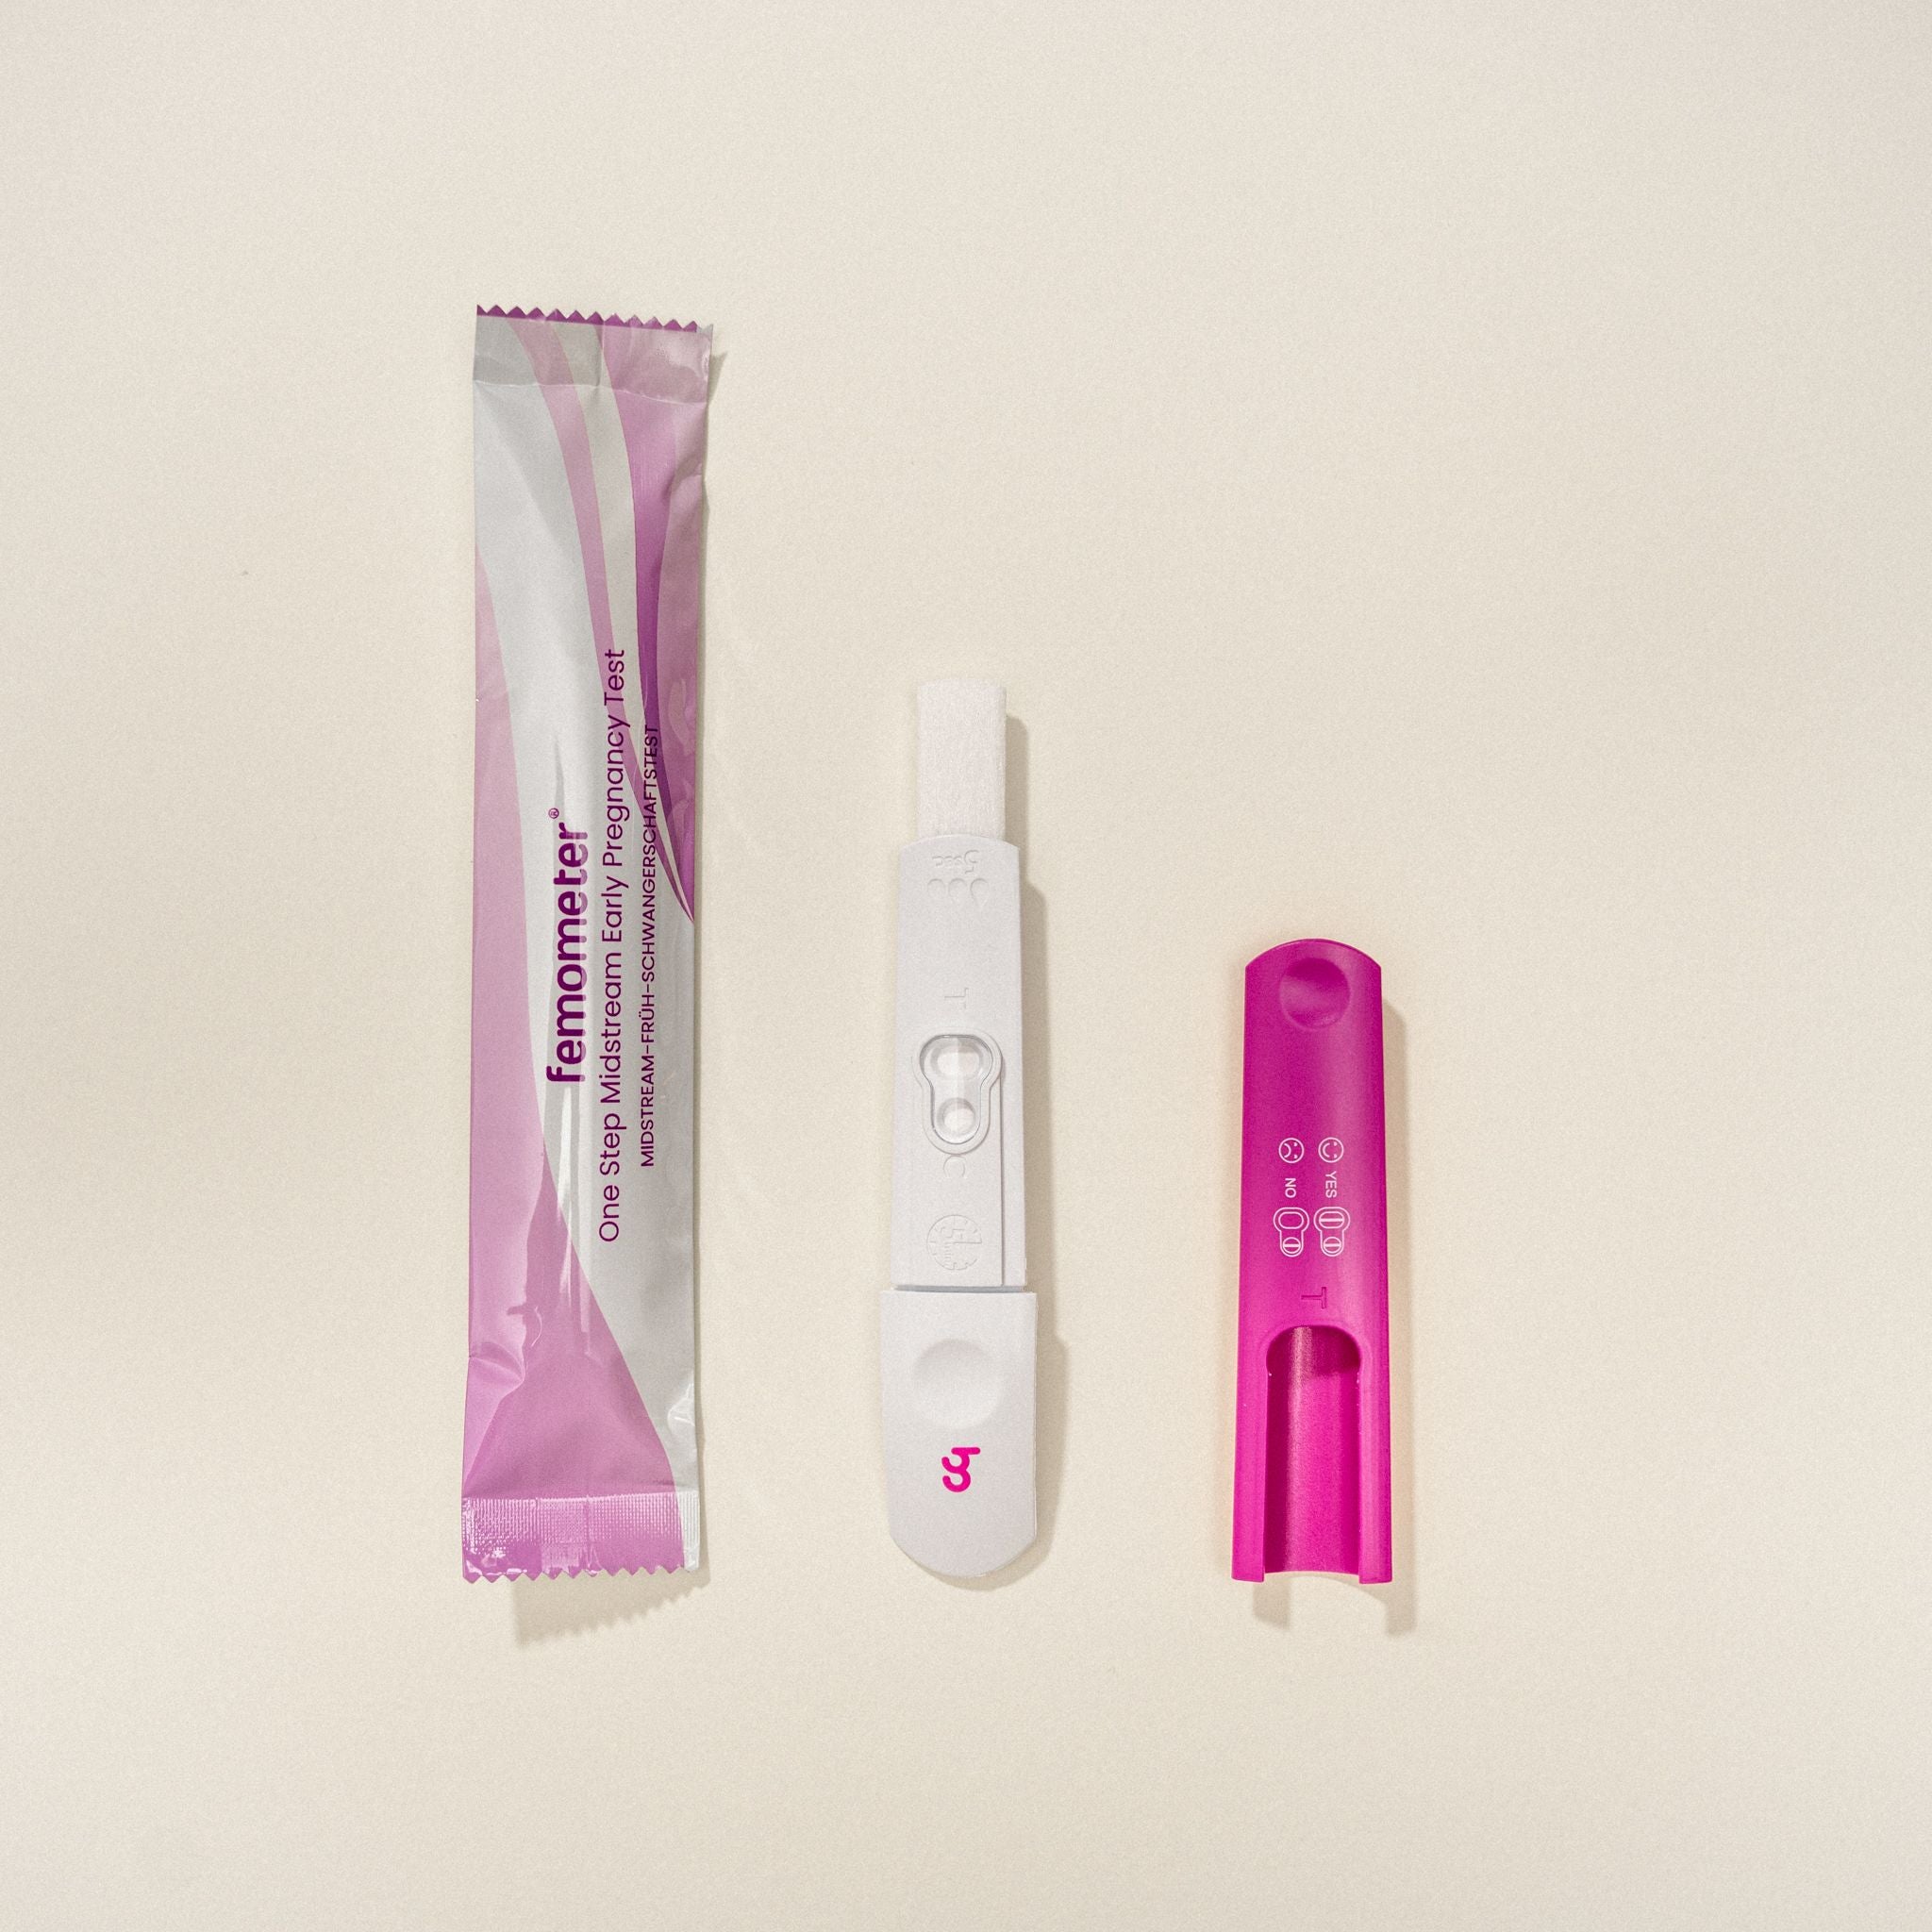 Femometer pregnancy test Stick 3 pcs. – Gravidtid